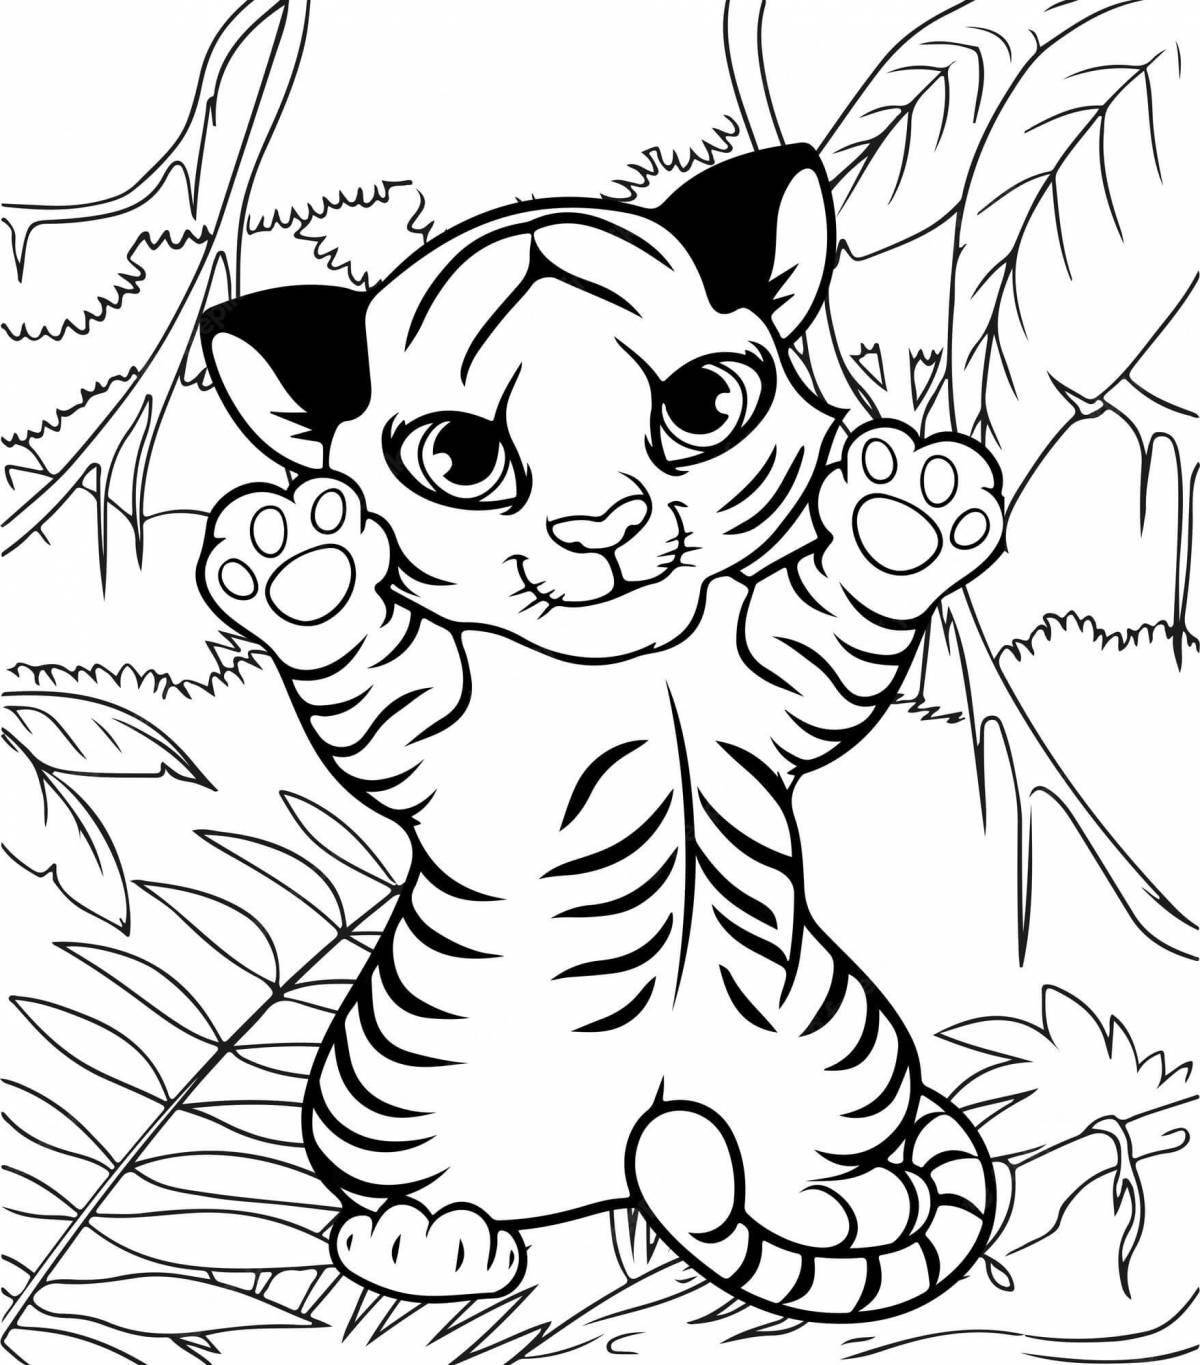 Coloring book playful tiger cub